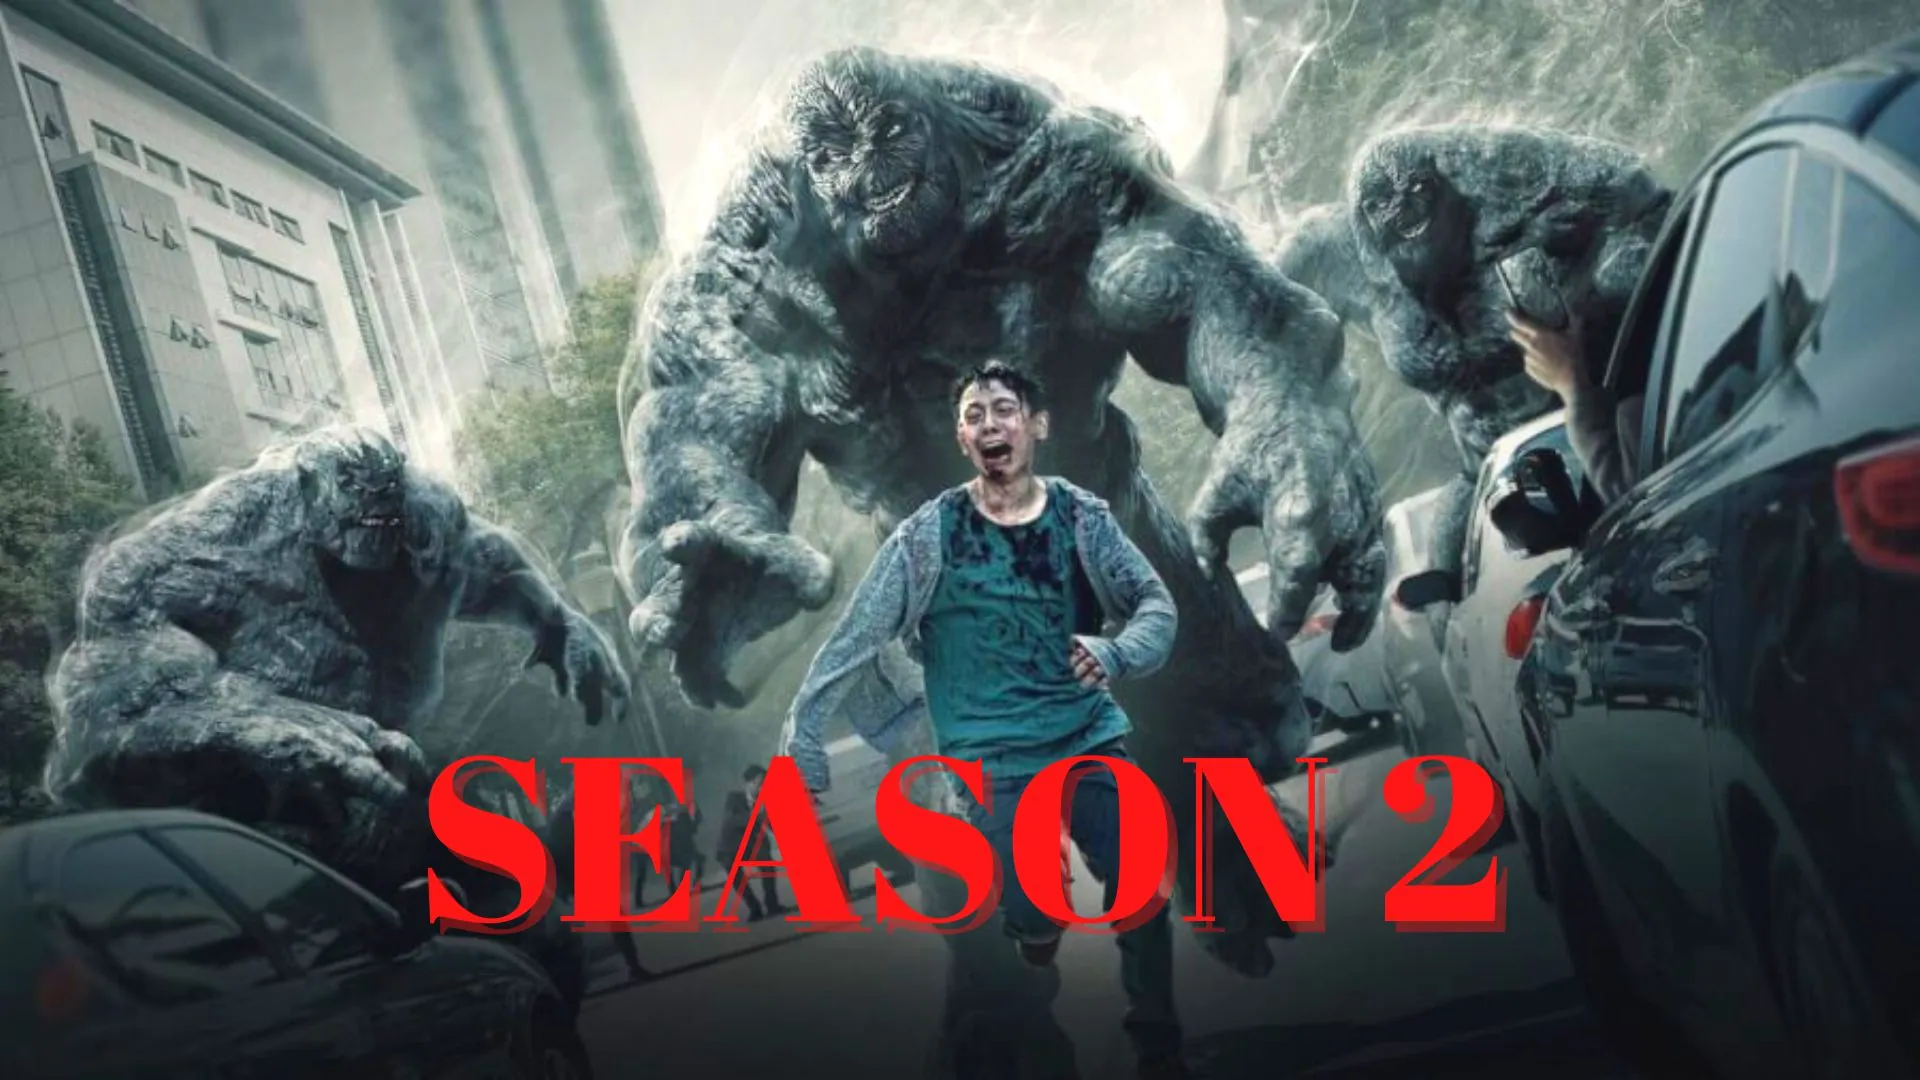 Netflix Officially Announced "Hellbound Season 2"